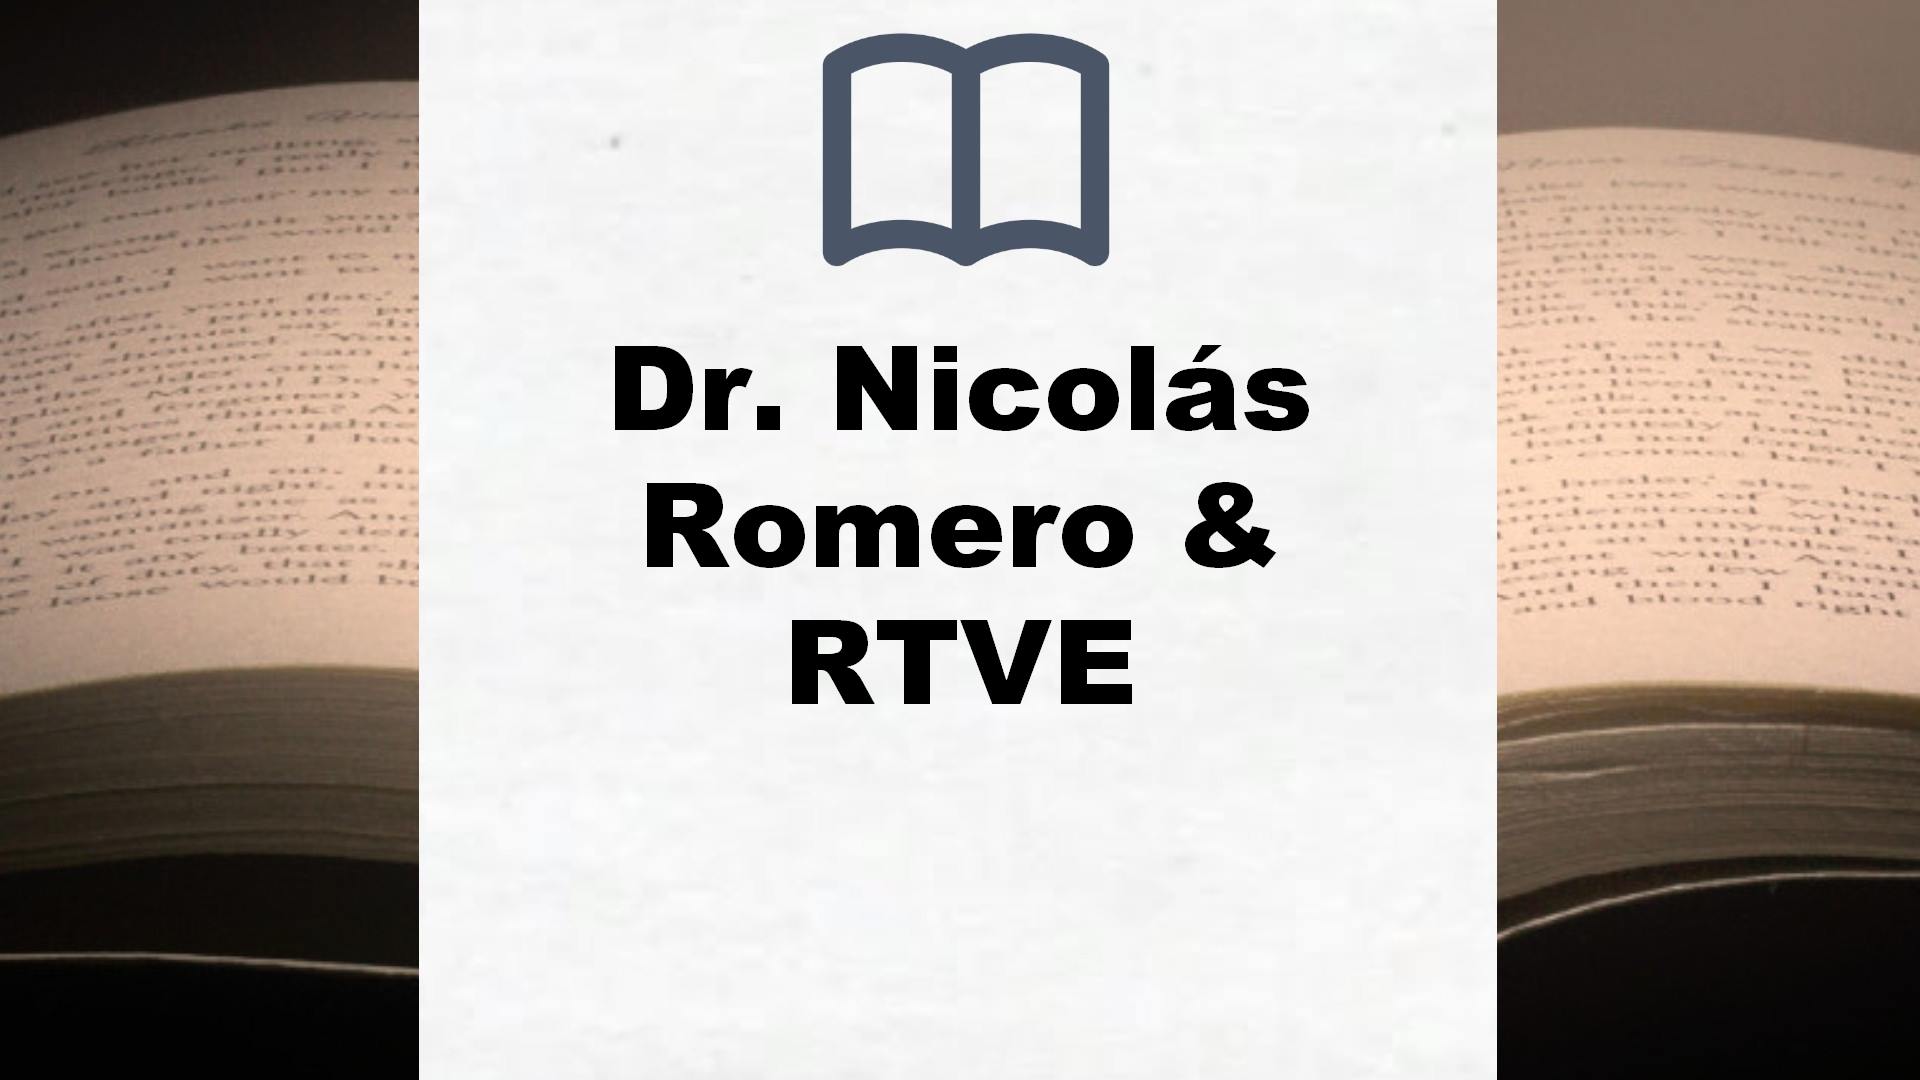 Libros Dr. Nicolás Romero & RTVE